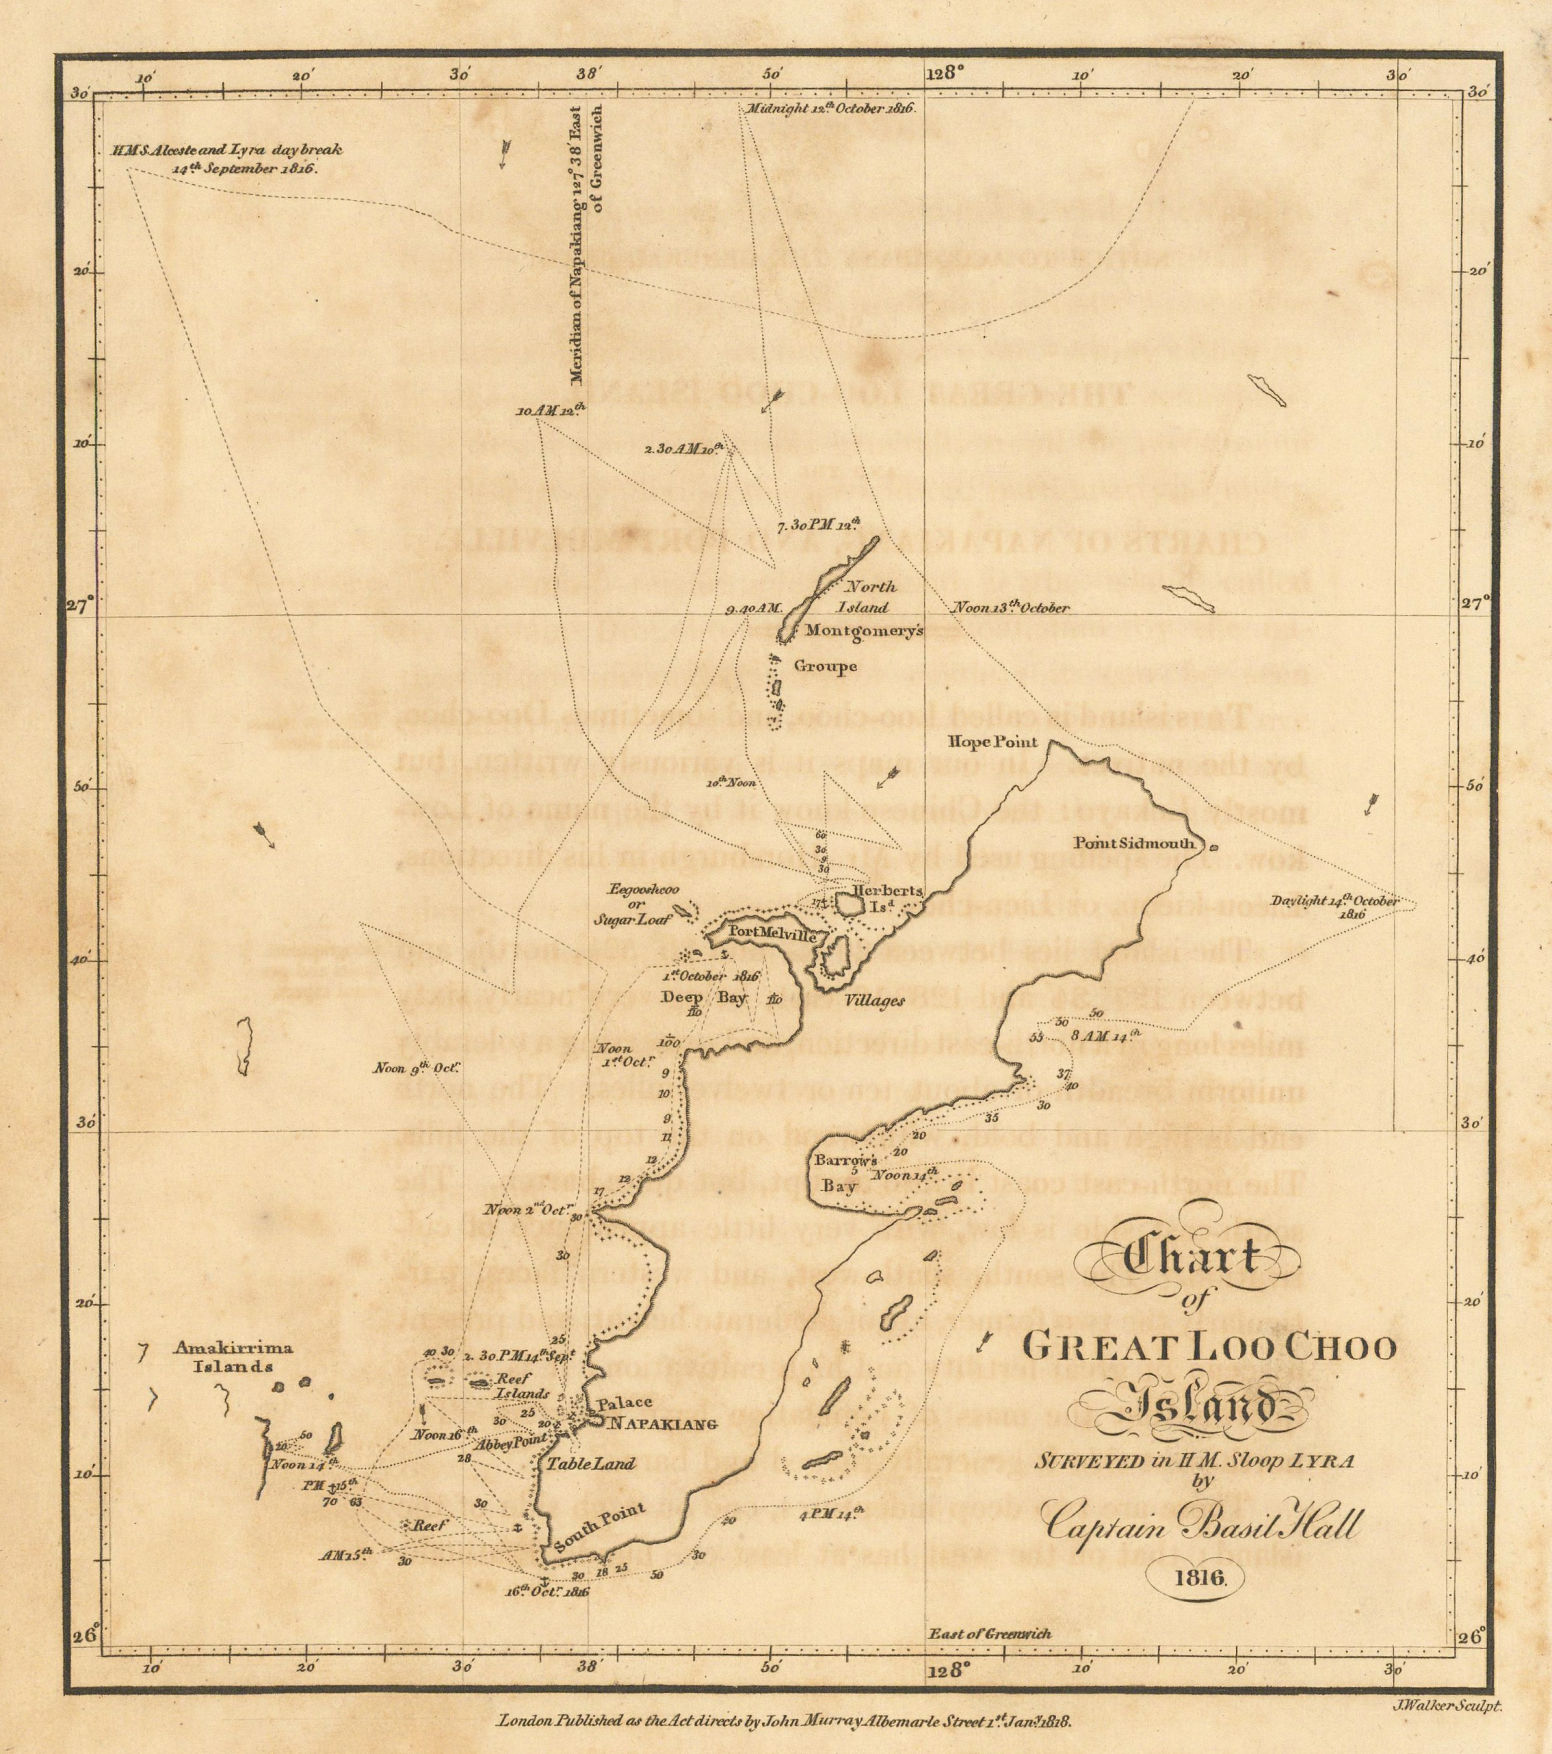 Associate Product Chart of the Great Loo Choo Island by Captn. Basil Hall. Okinawa, Japan 1818 map